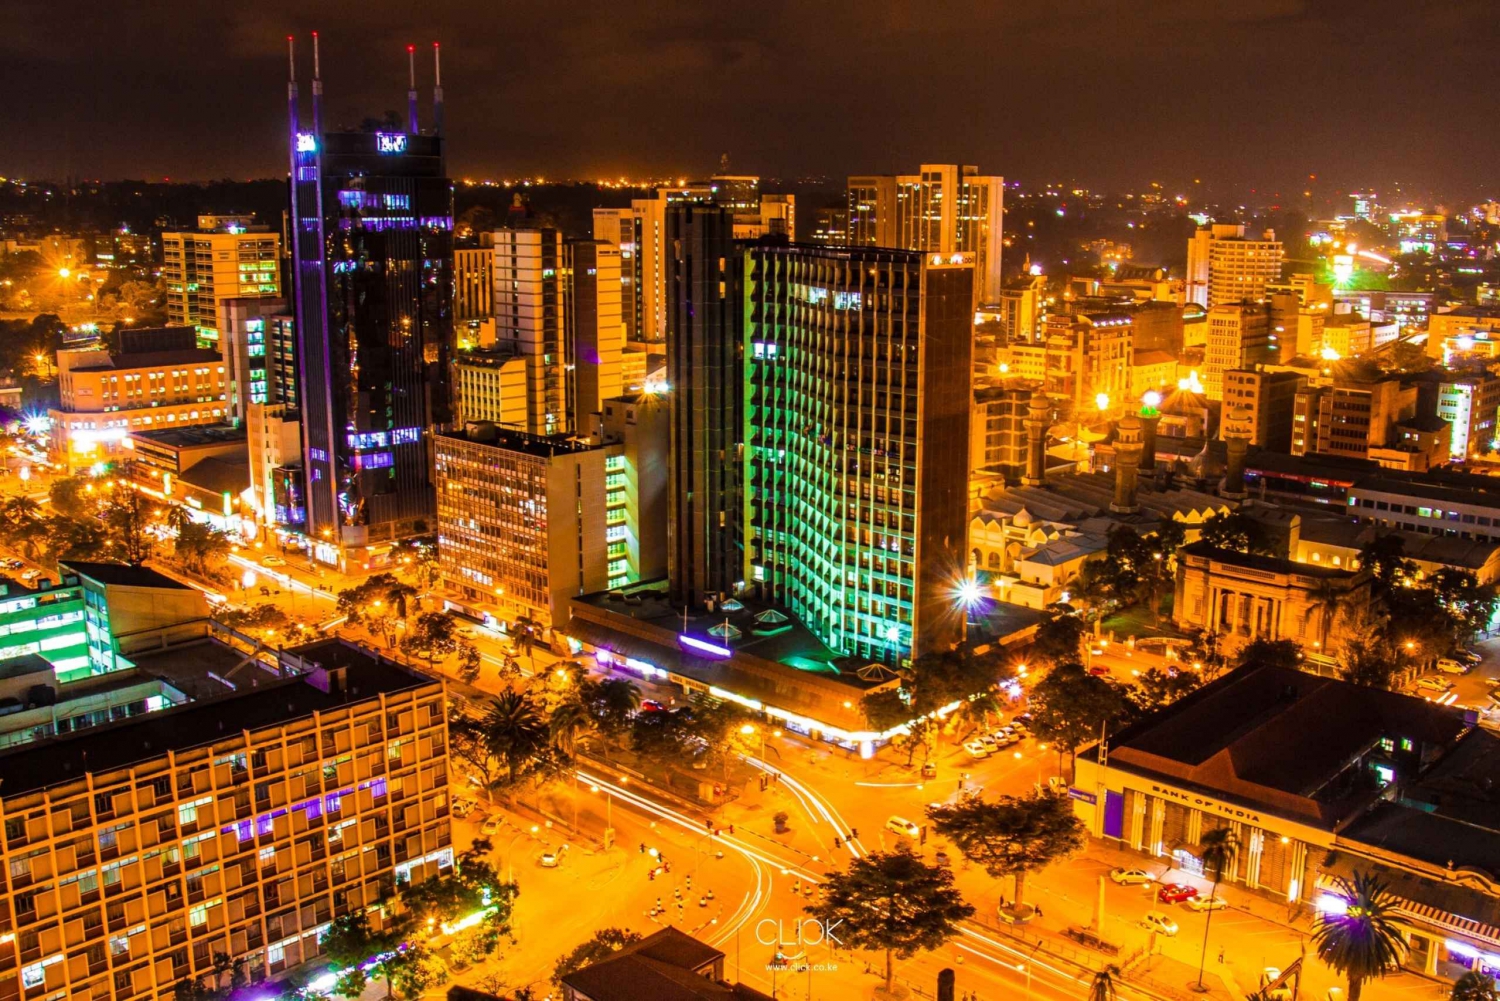 Dagstur i staden Nairobi